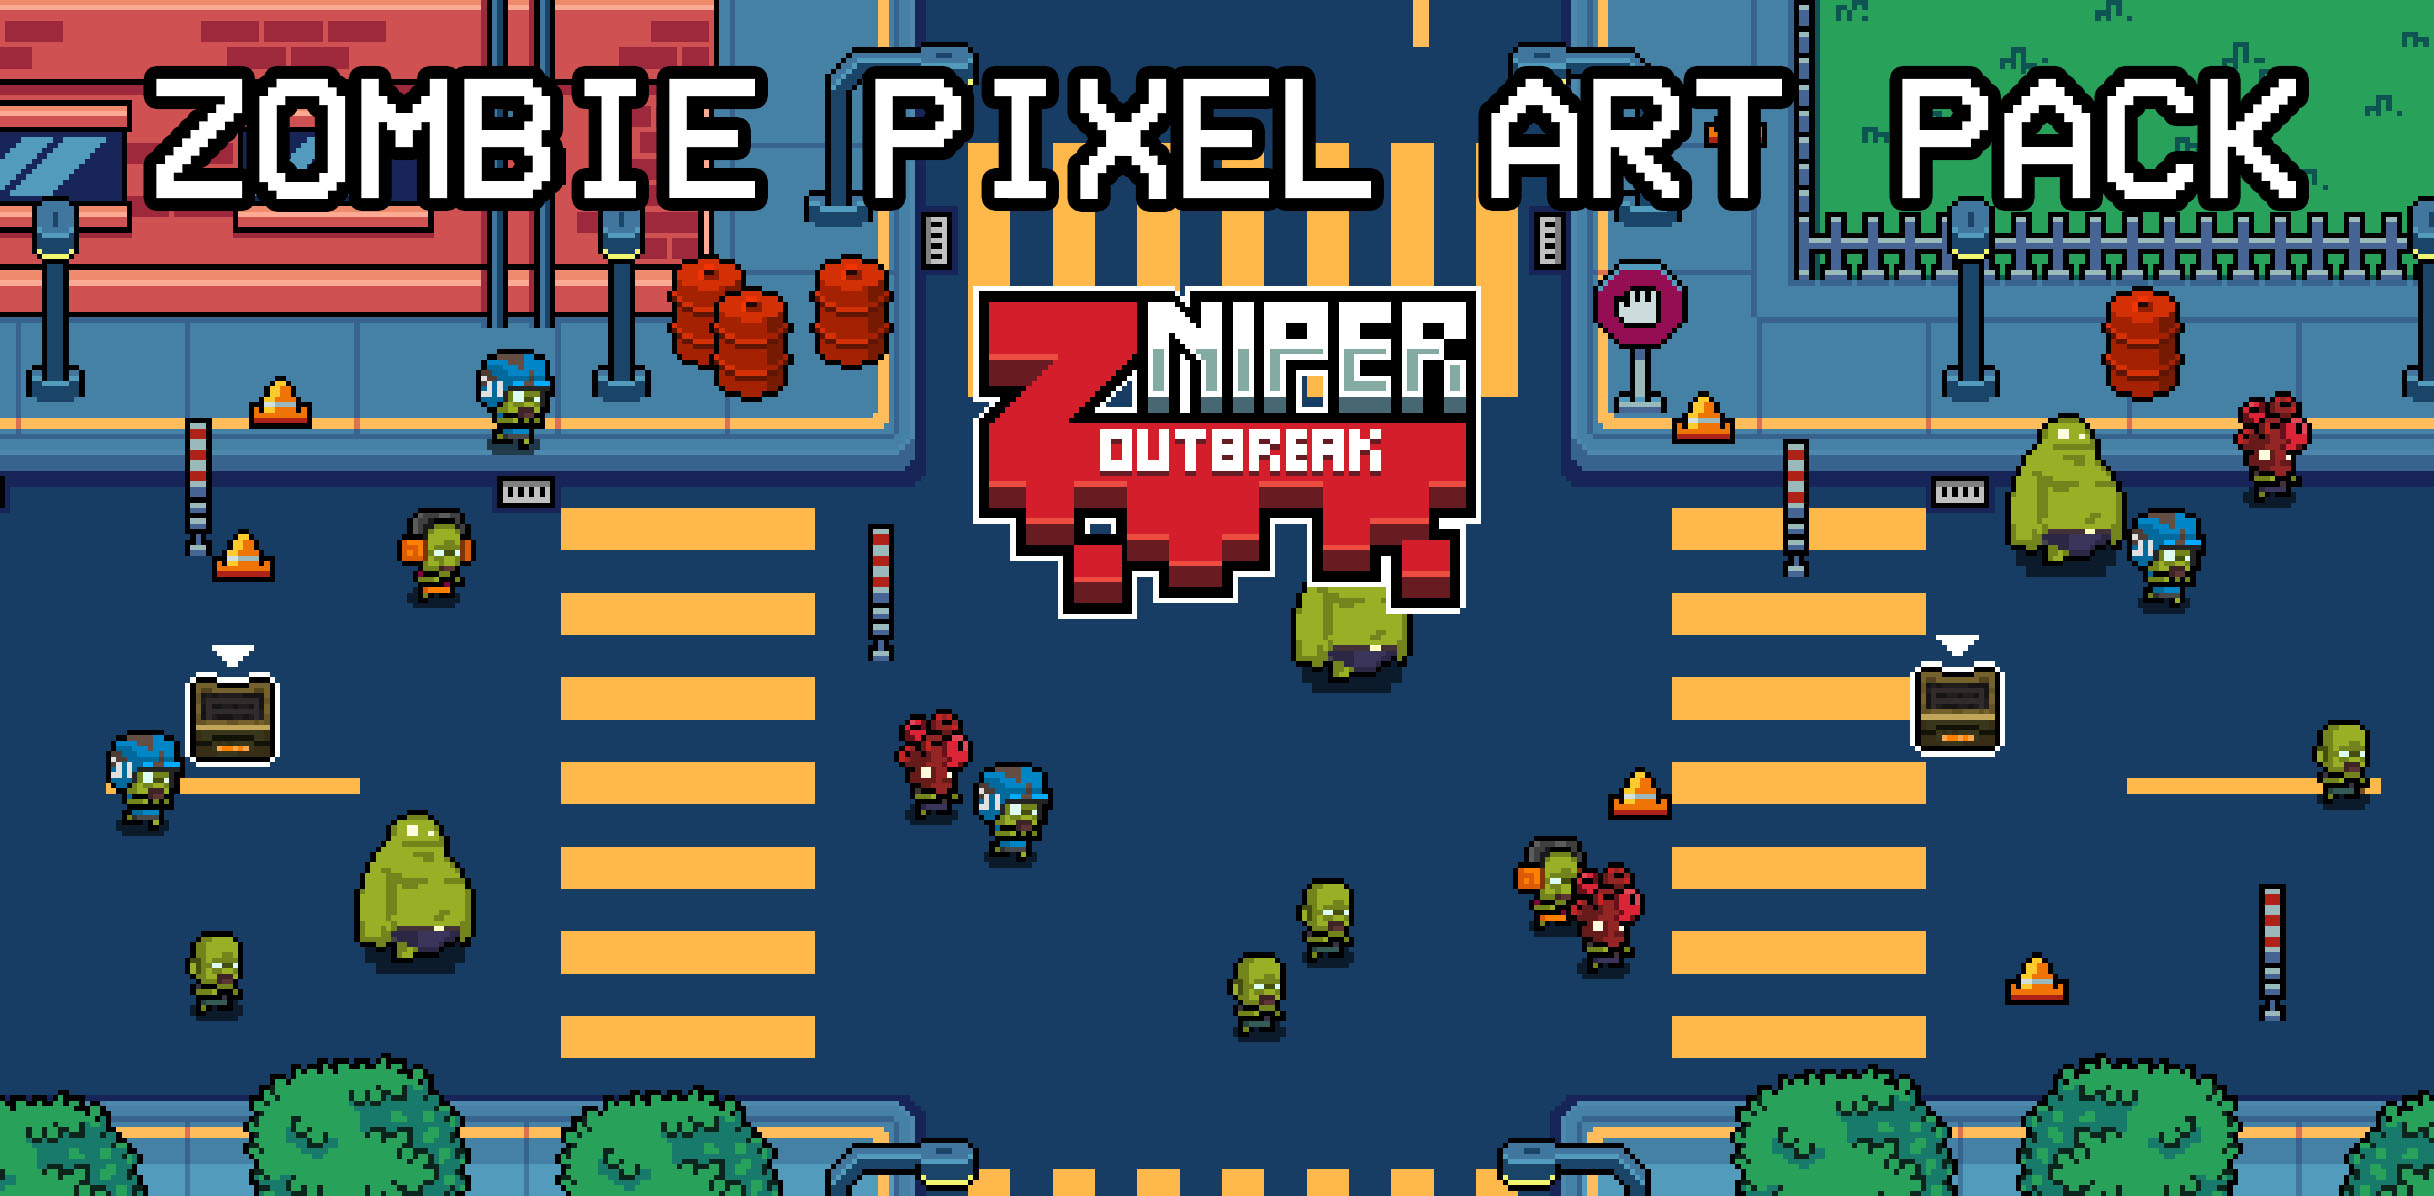 Zombie Pixel Art Assets Pack